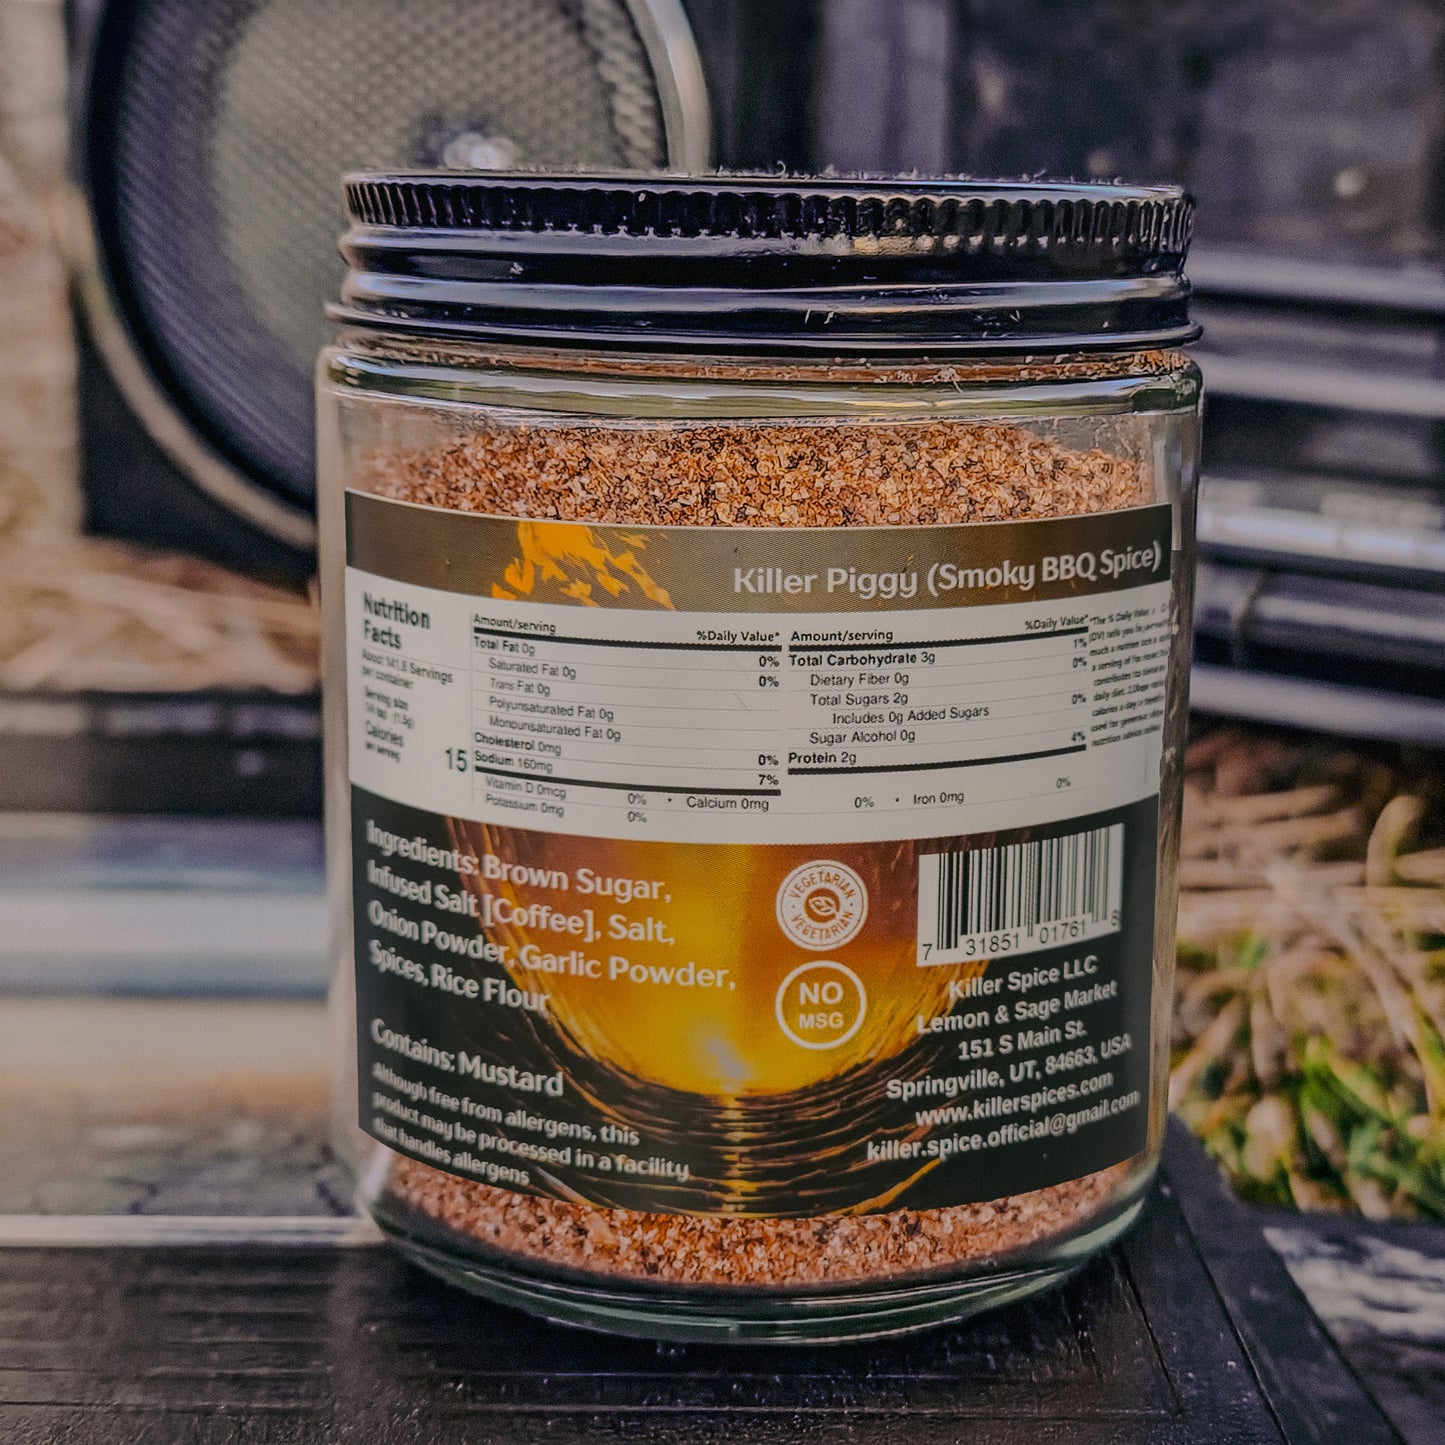 A jar of Killer Spice's Killer Piggy (Smoky BBQ Spice) on a rustic background.